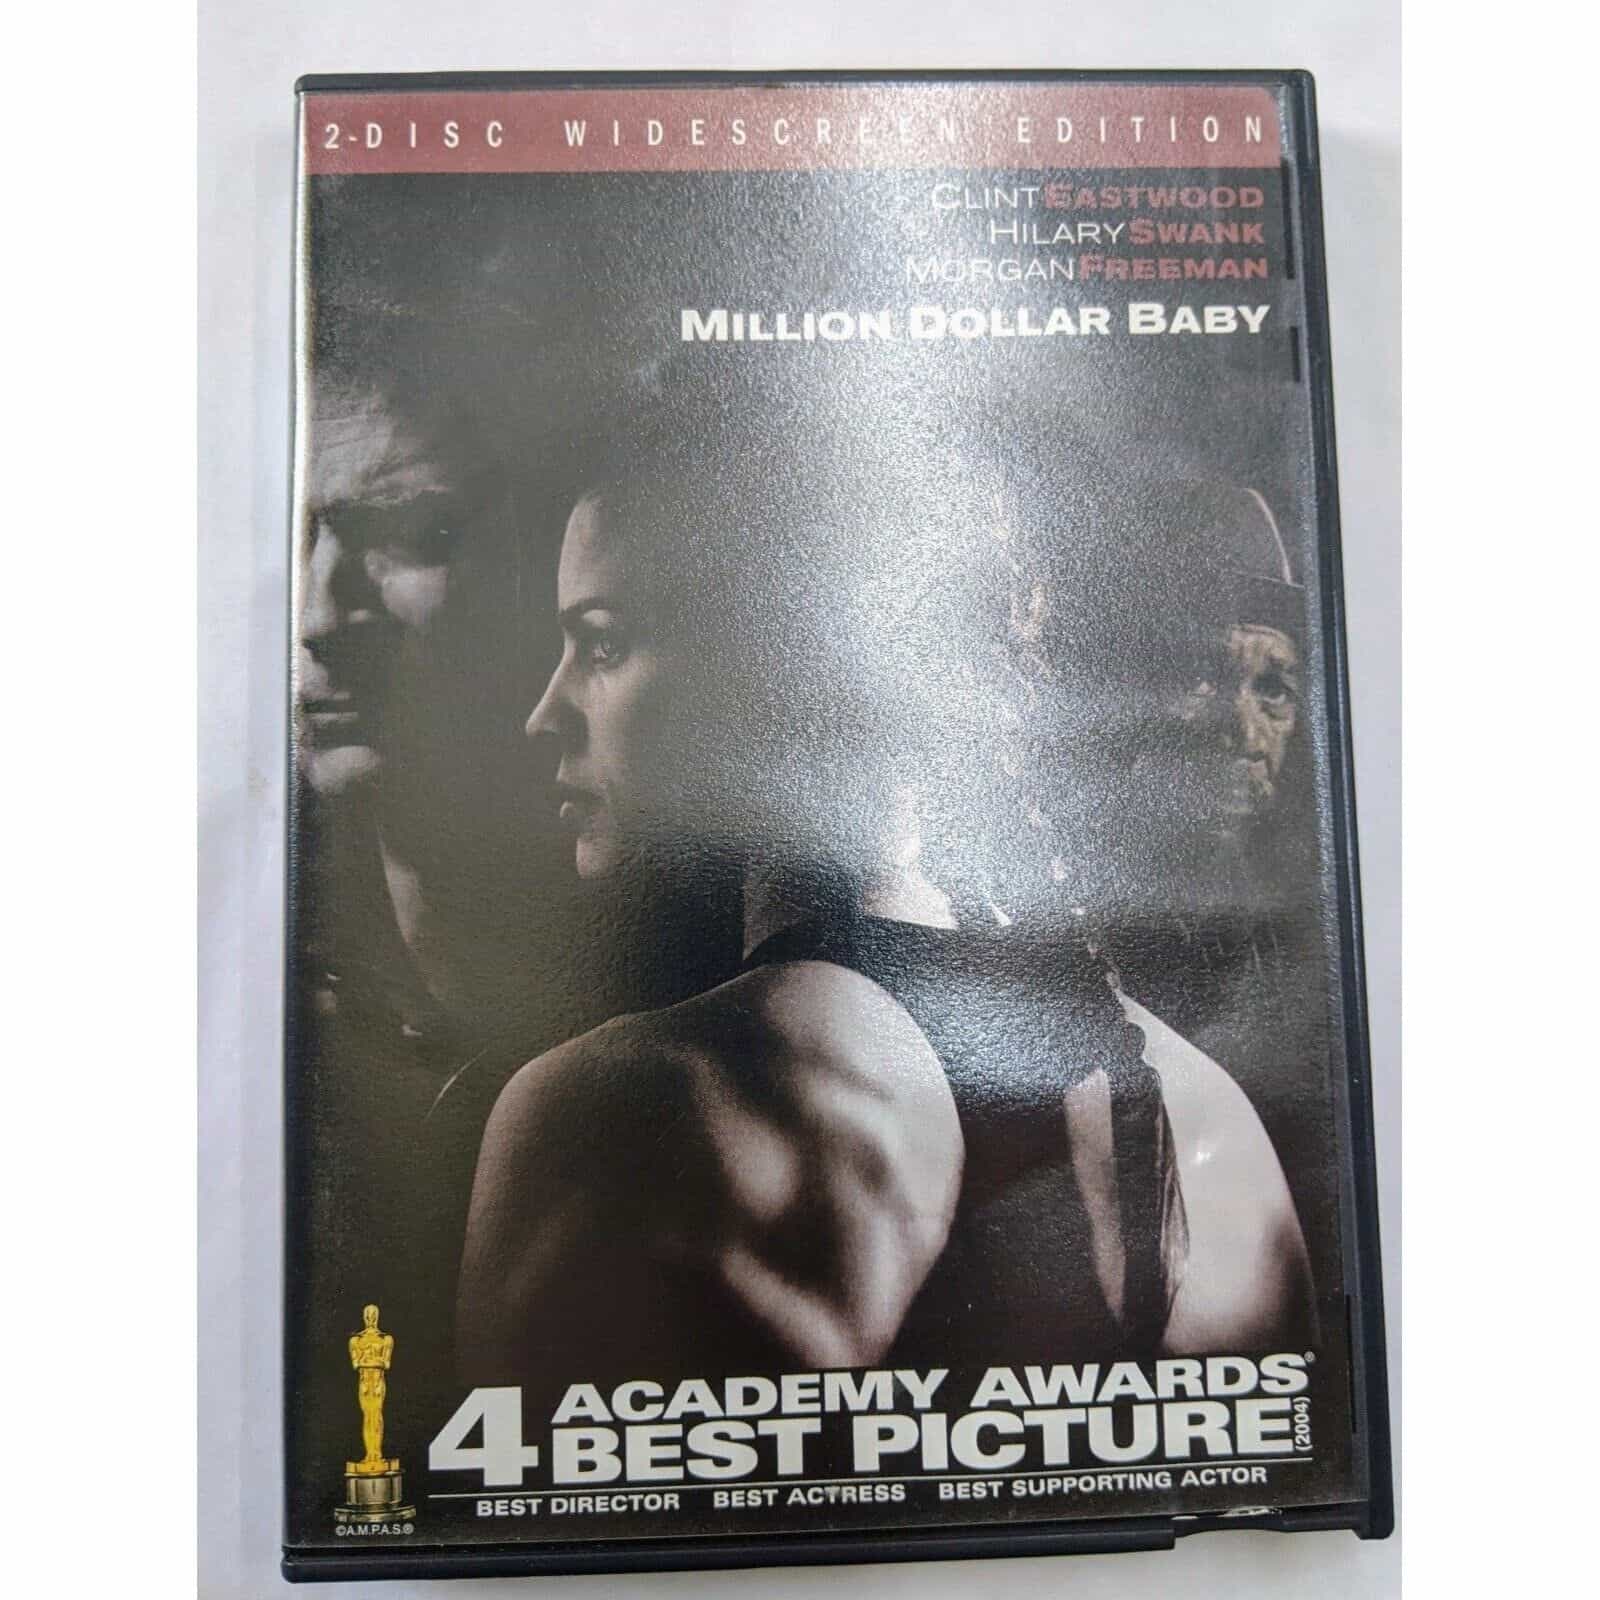 Million Dollar Baby – 2 disc widescreen edition DVD movie